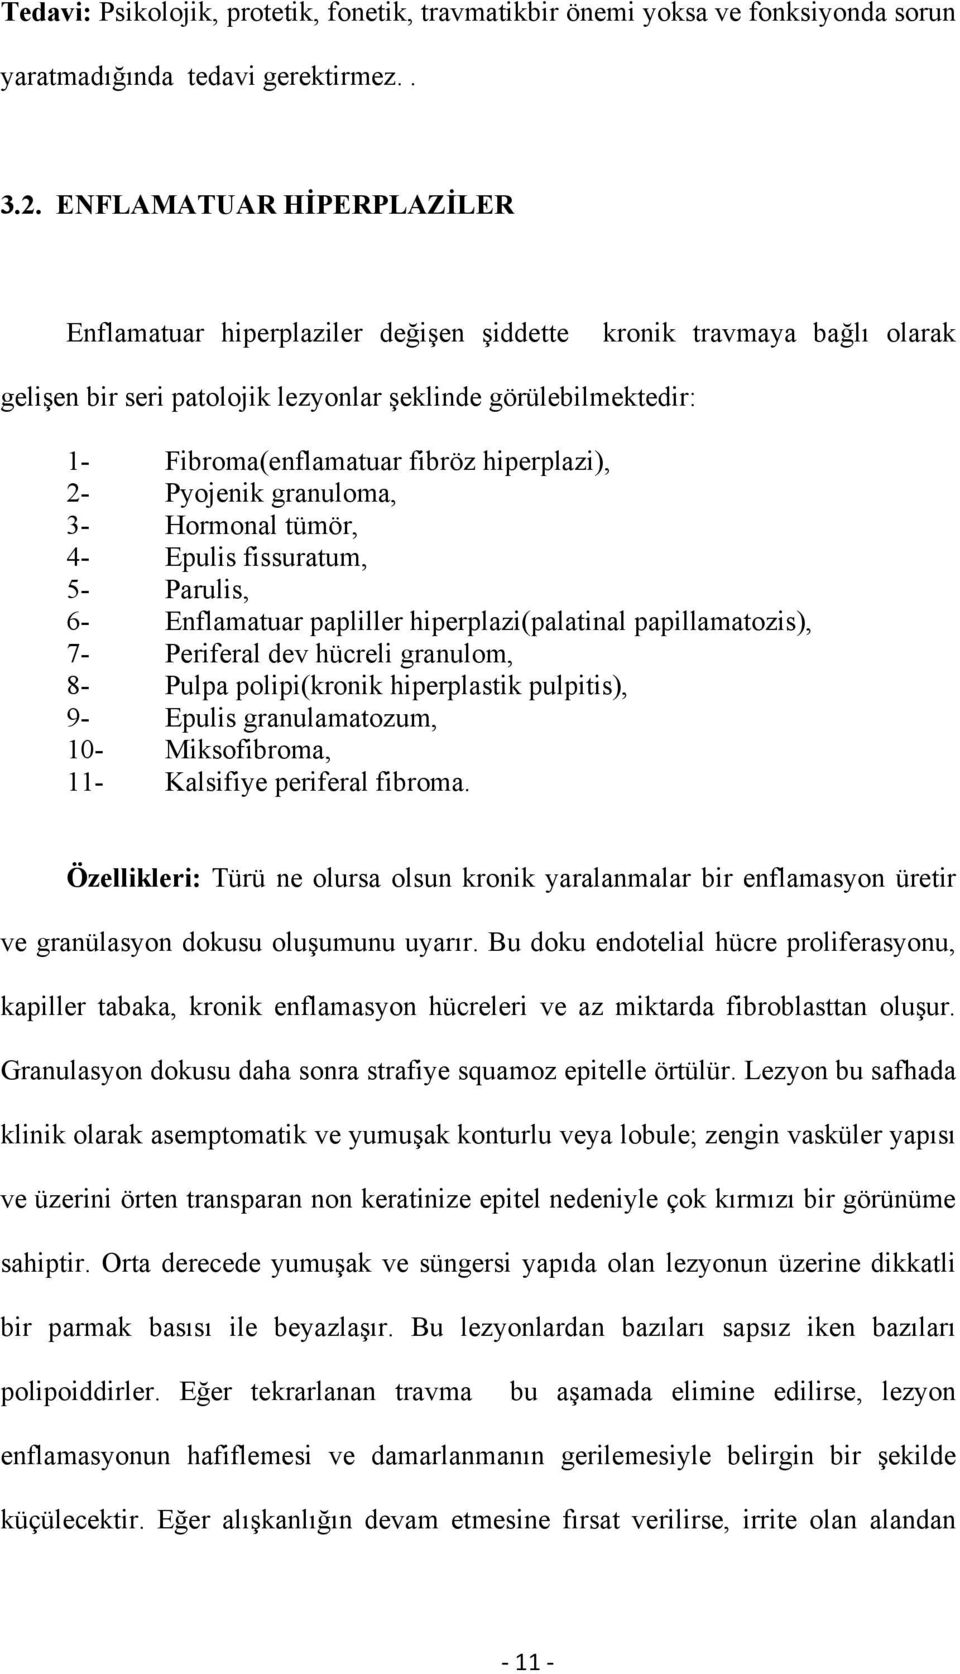 hiperplazi), 2- Pyojenik granuloma, 3- Hormonal tümör, 4- Epulis fissuratum, 5- Parulis, 6- Enflamatuar papliller hiperplazi(palatinal papillamatozis), 7- Periferal dev hücreli granulom, 8- Pulpa